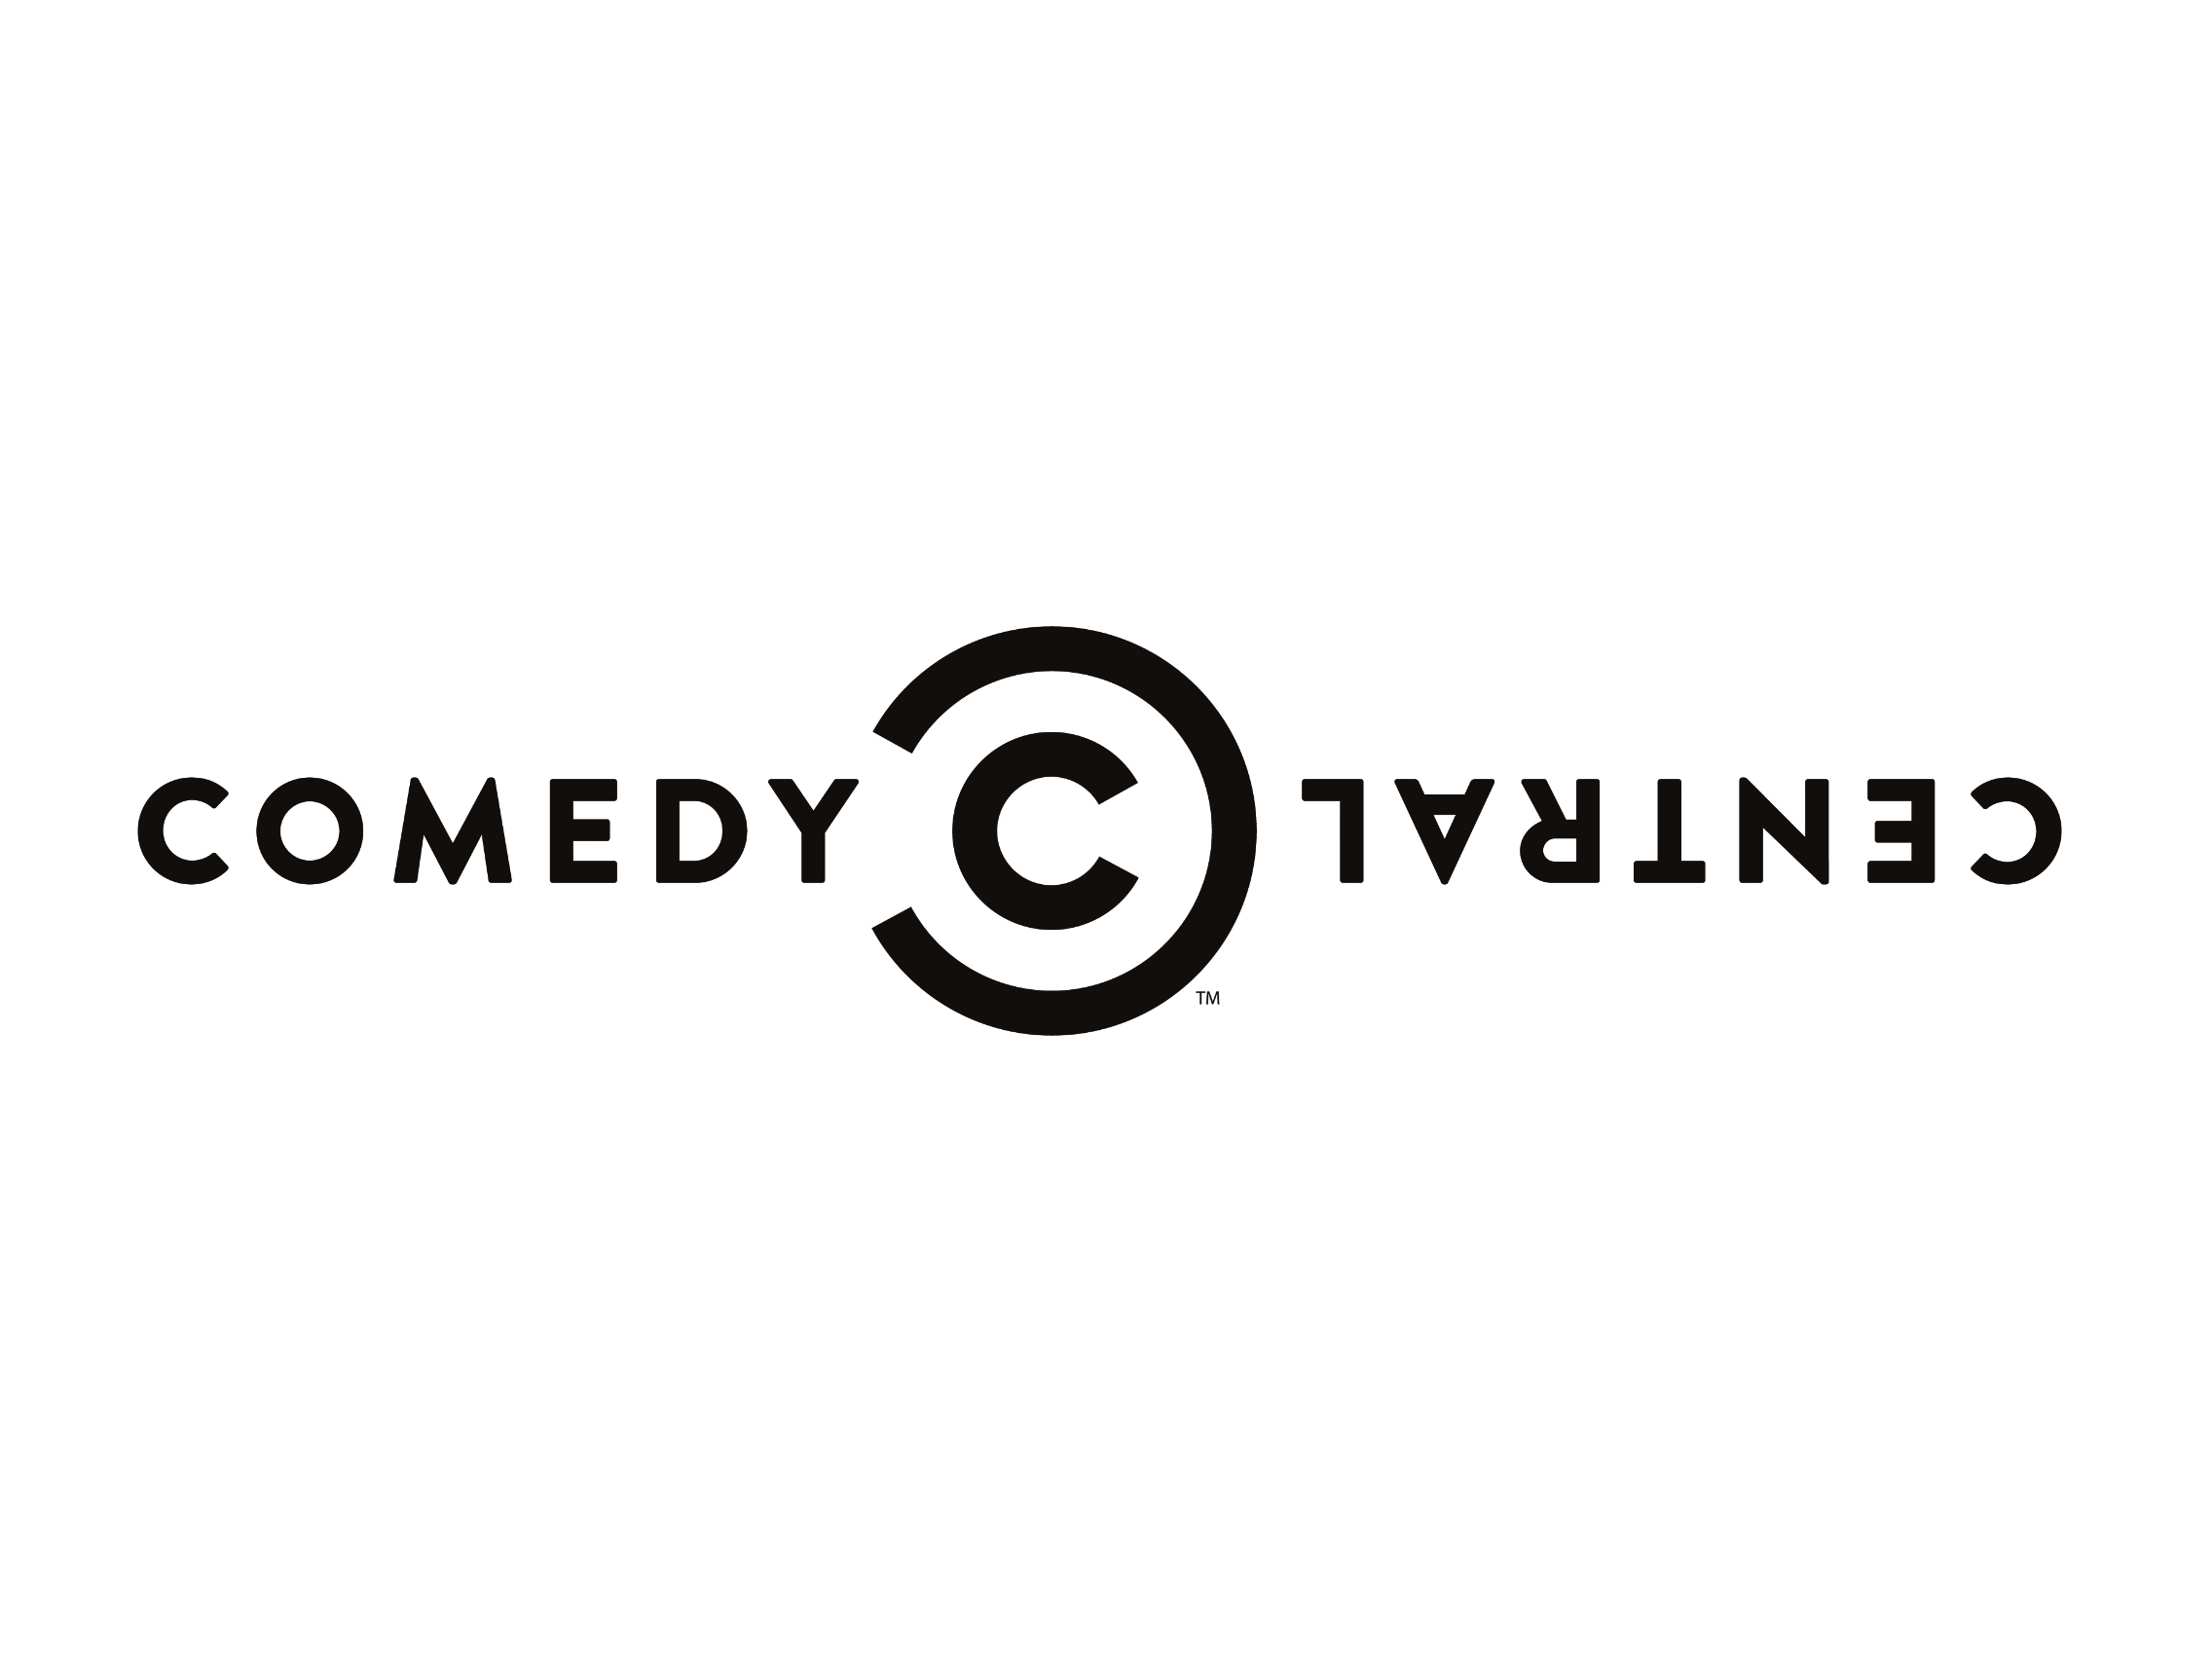 Comedy Central Logo - Comedy Central Logo 2011 horizontal